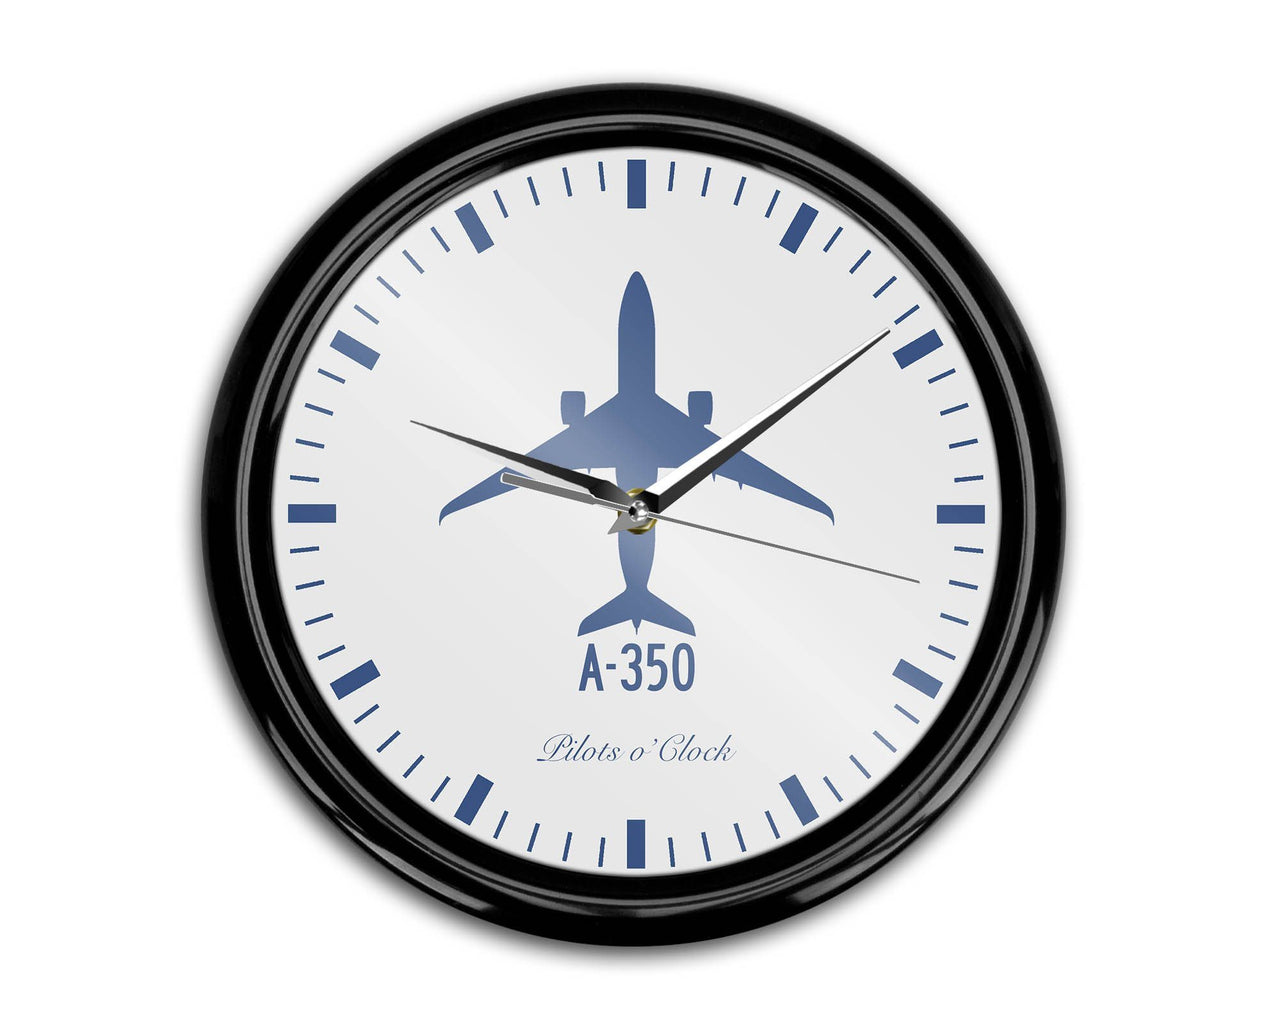 Airbus A350 Printed Wall Clocks Aviation Shop 